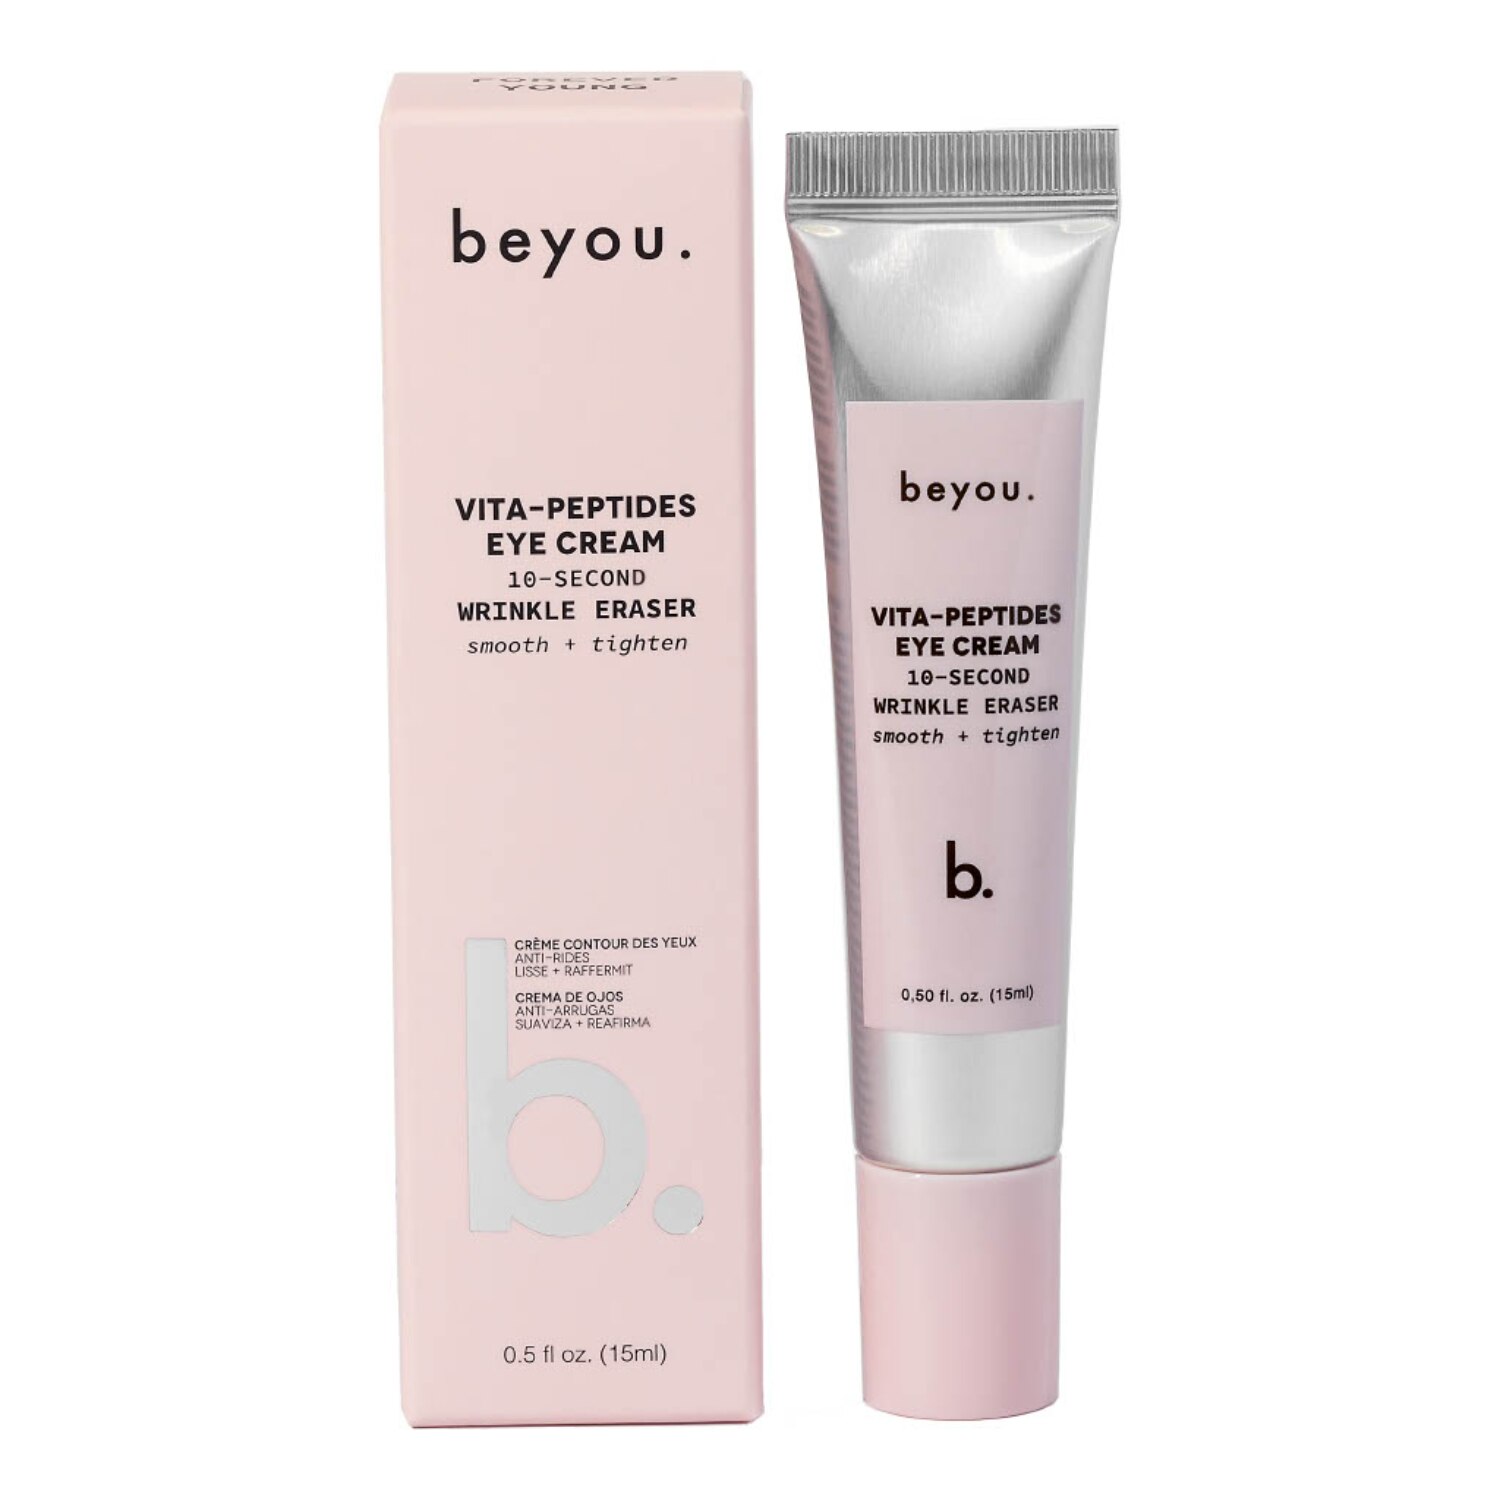 Beyou 10-Second Wrinkle Eraser Eye Cream, 0.5 oz